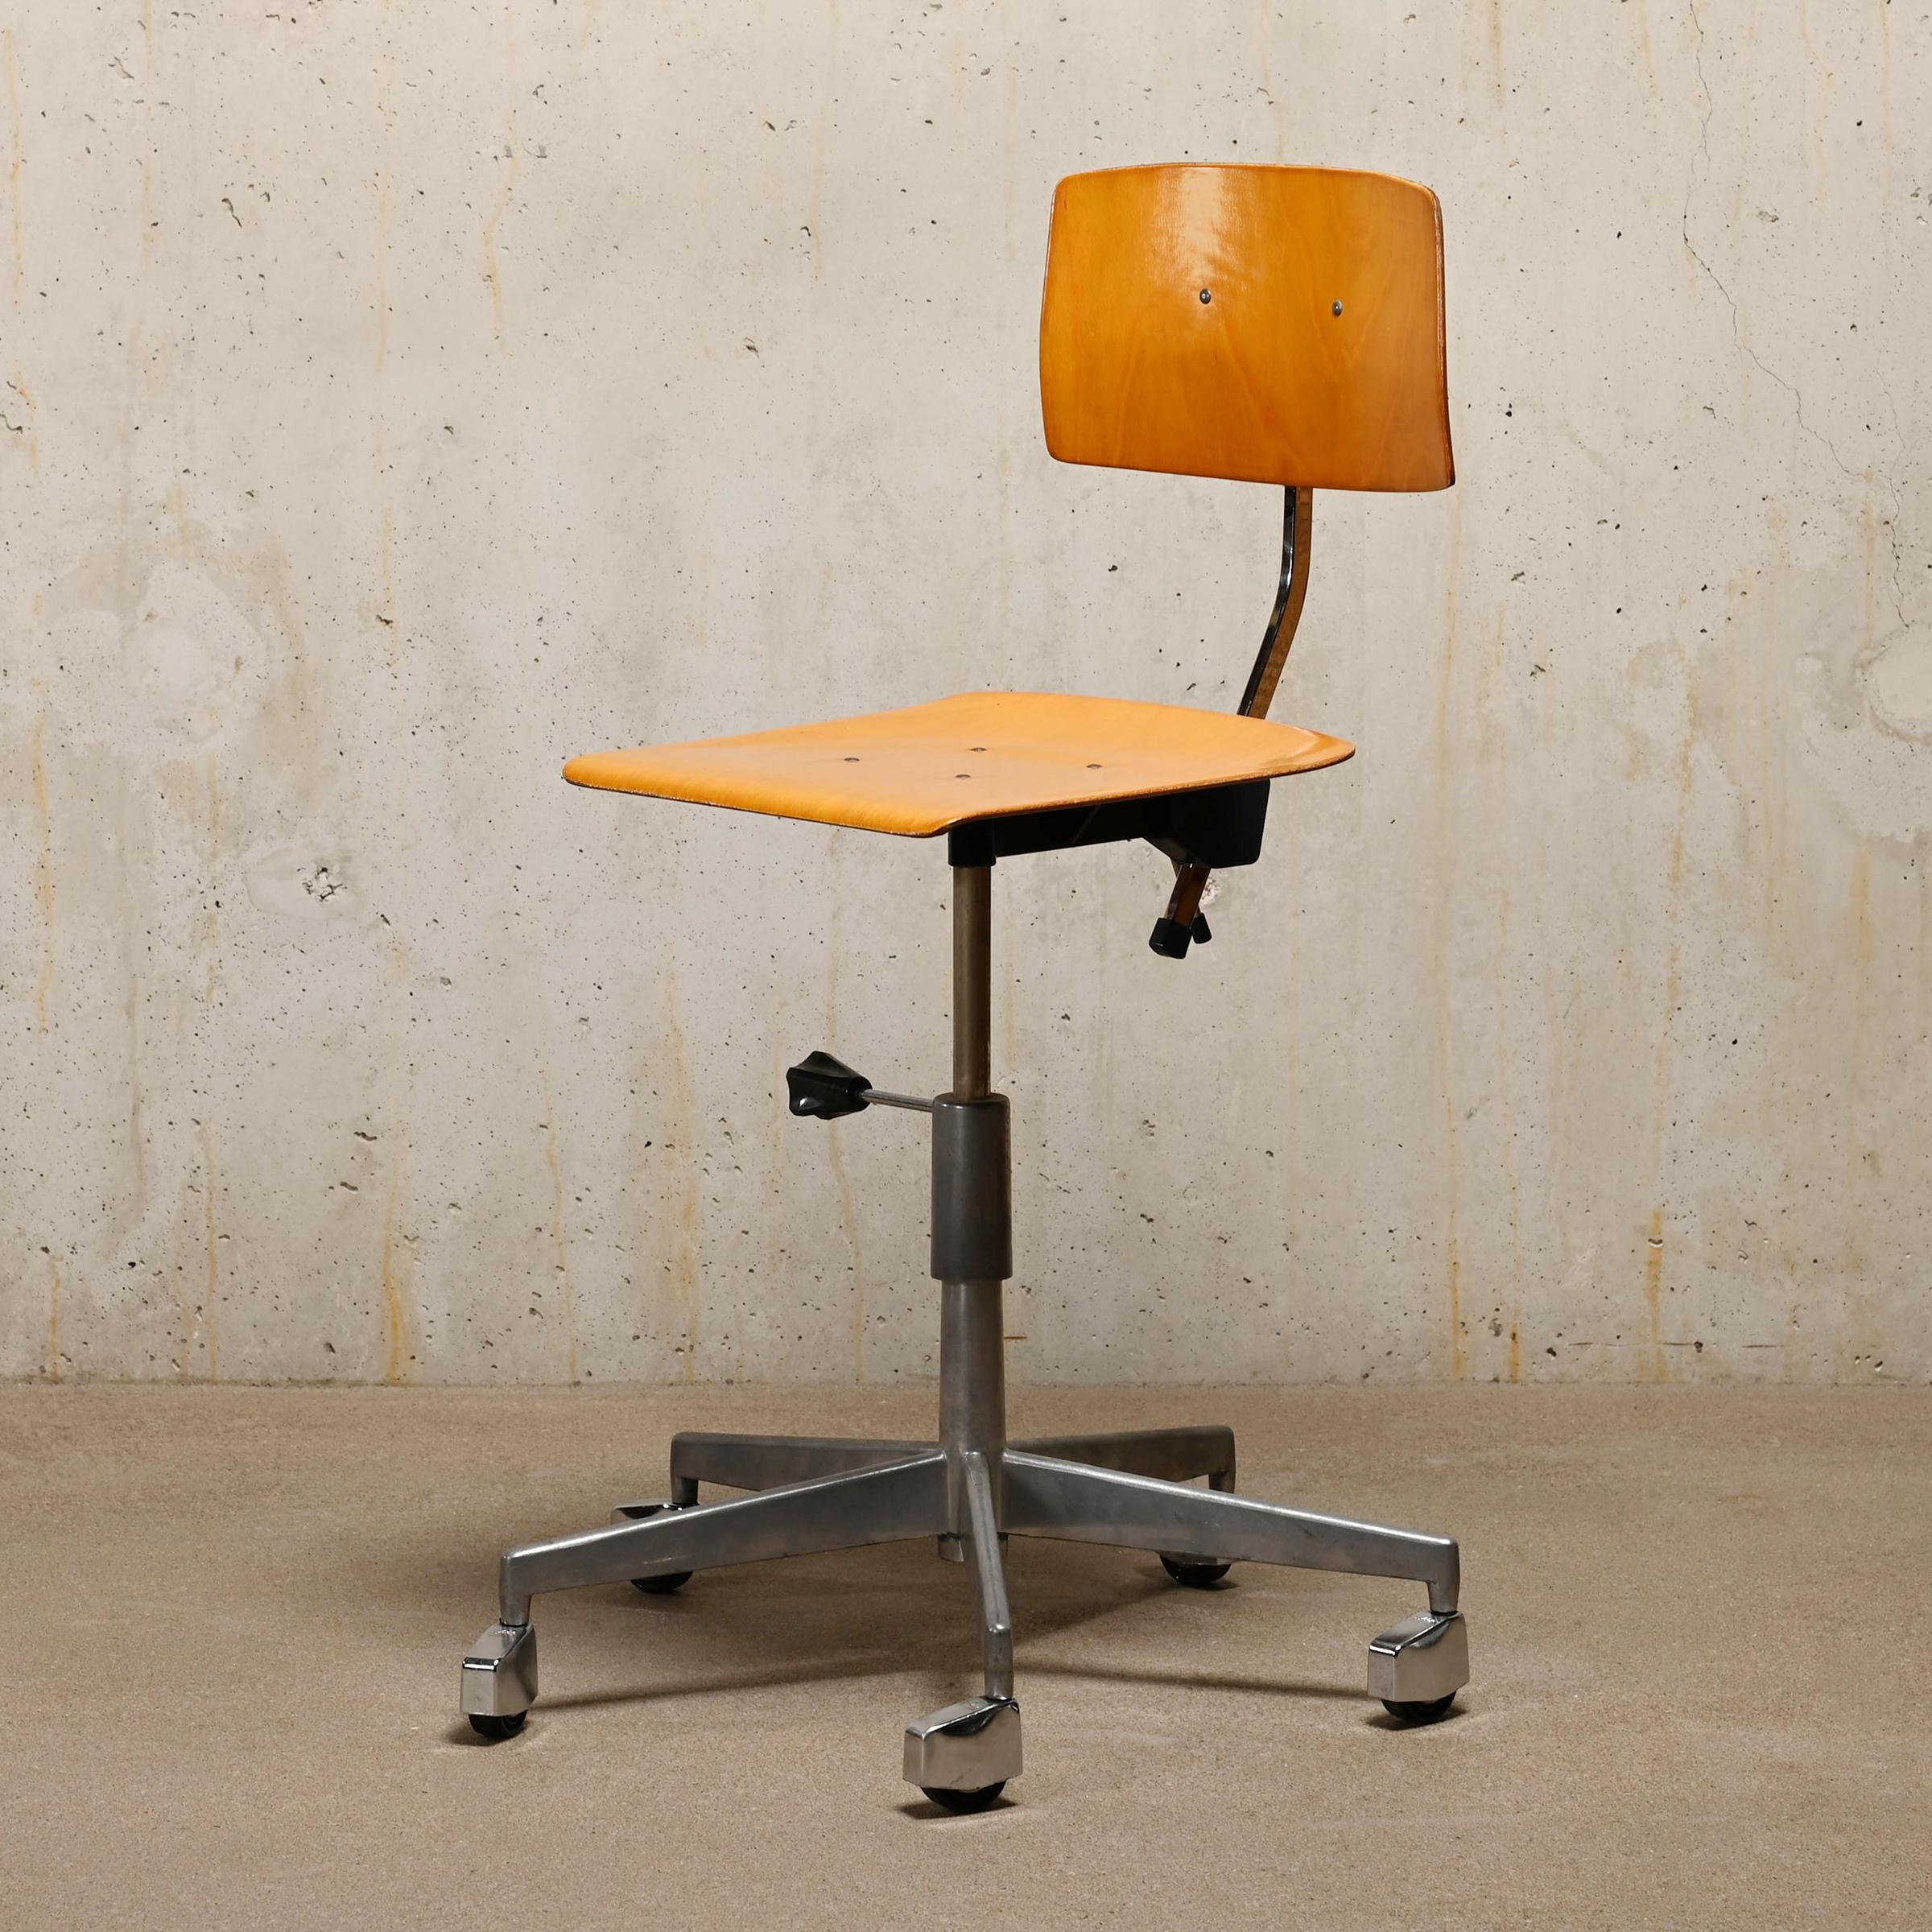 Mid-20th Century Jørgen Rasmussen Industrial Office / Desk Chair in Light Wood for Labofa